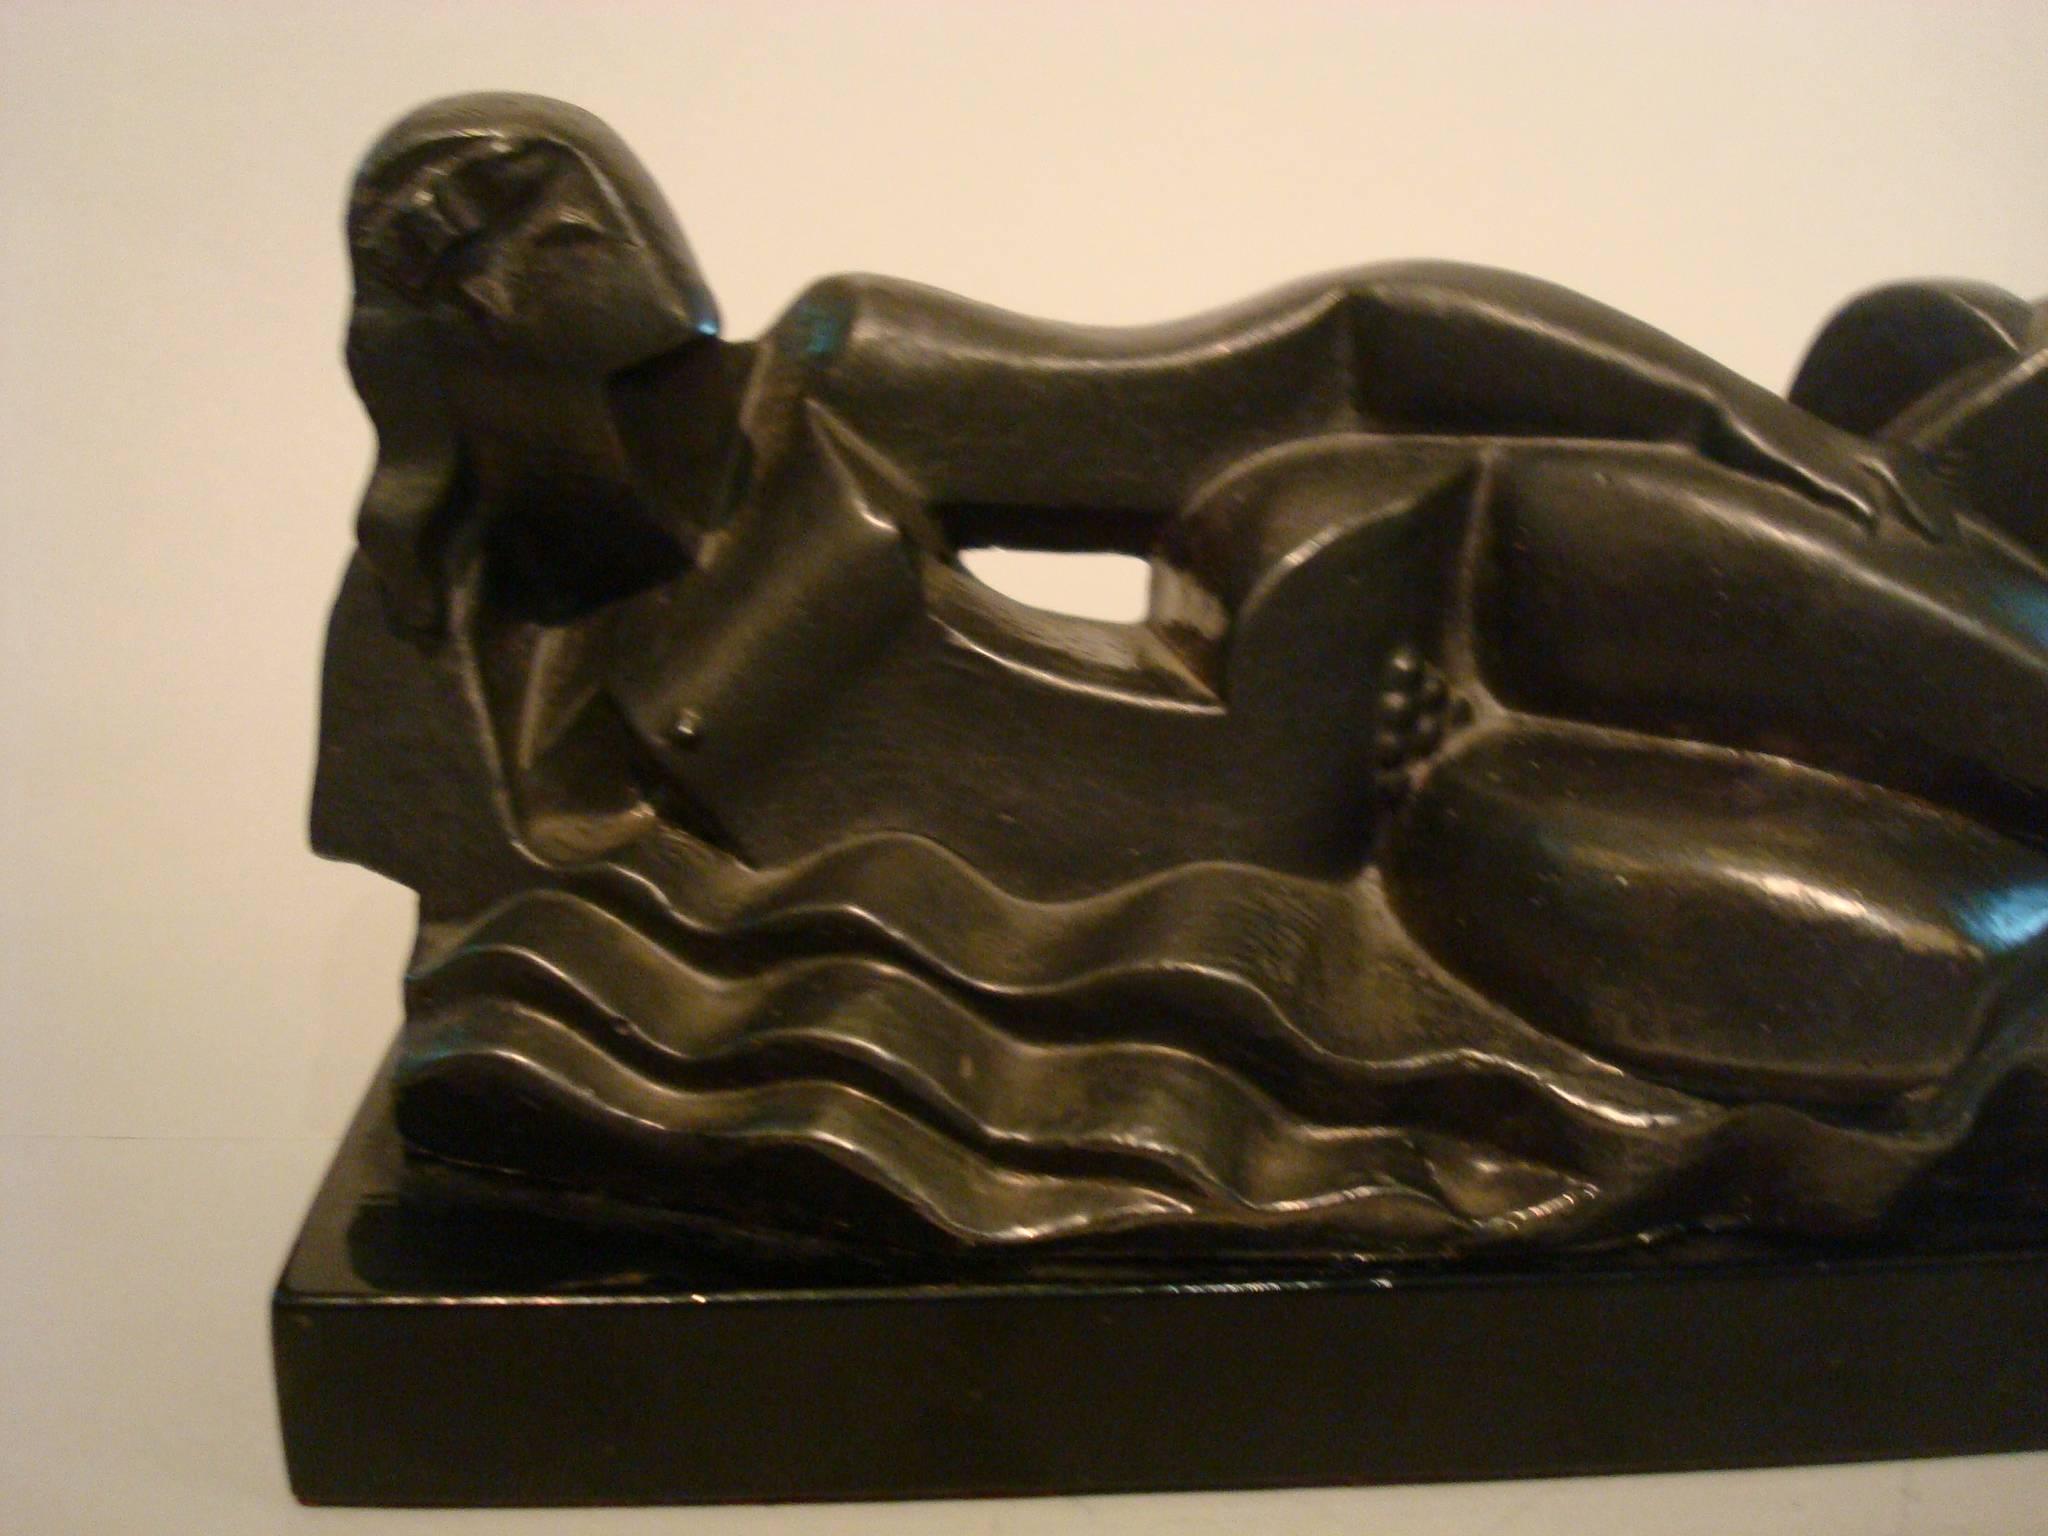 Argentine Art Deco, Cubist Lying Women Sculpture by Pablo Curatella Manes, 1920s For Sale